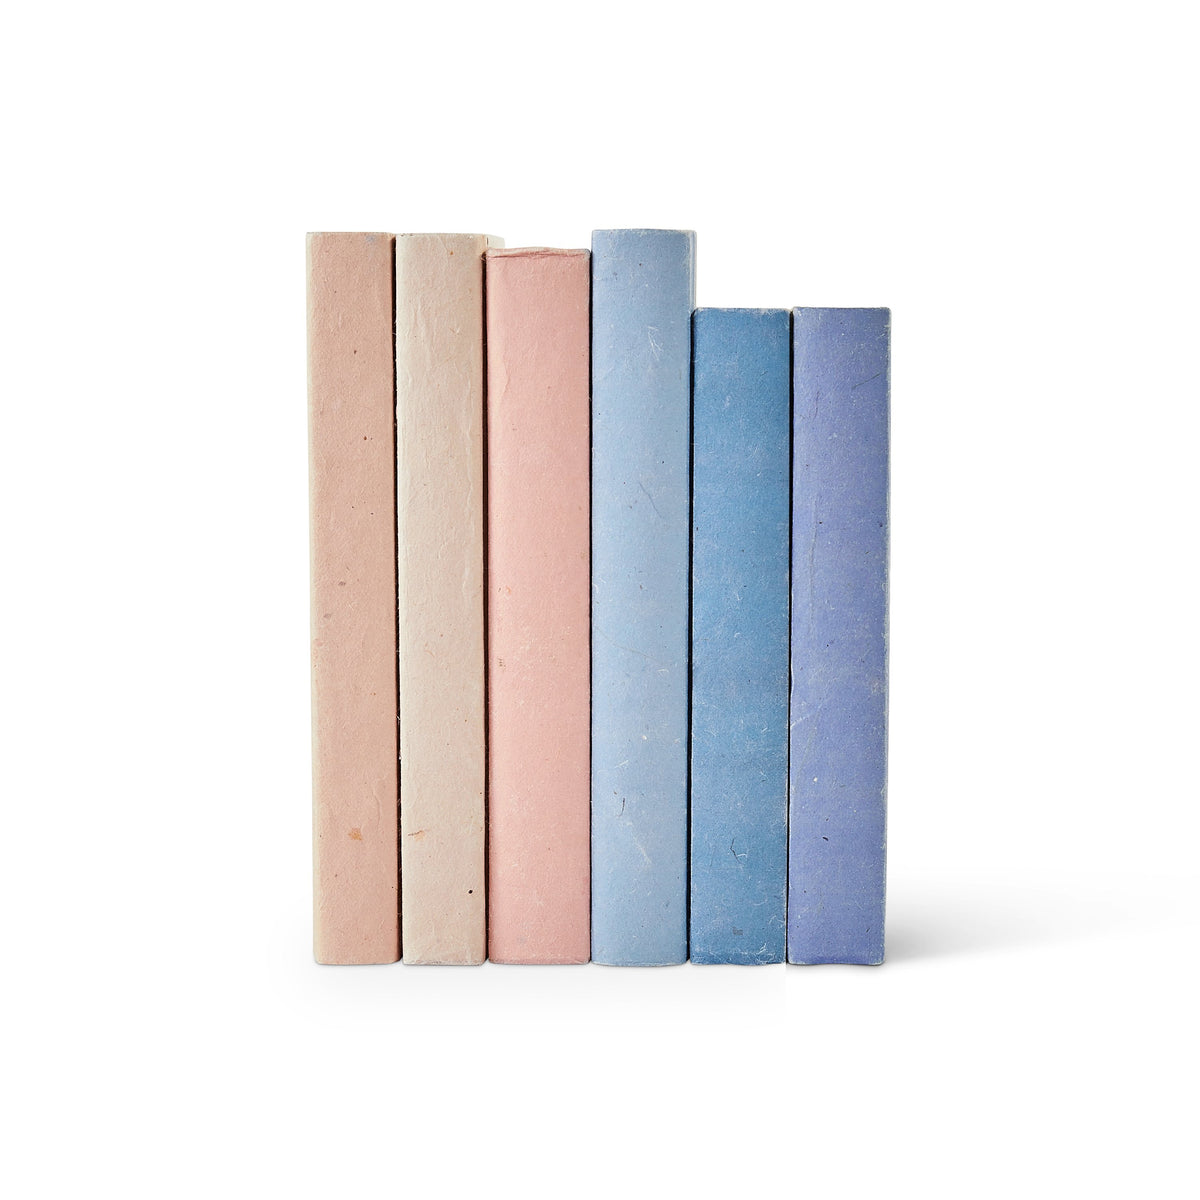 Cornflower Blue Parchment Decorative Books with Blush Pink Books